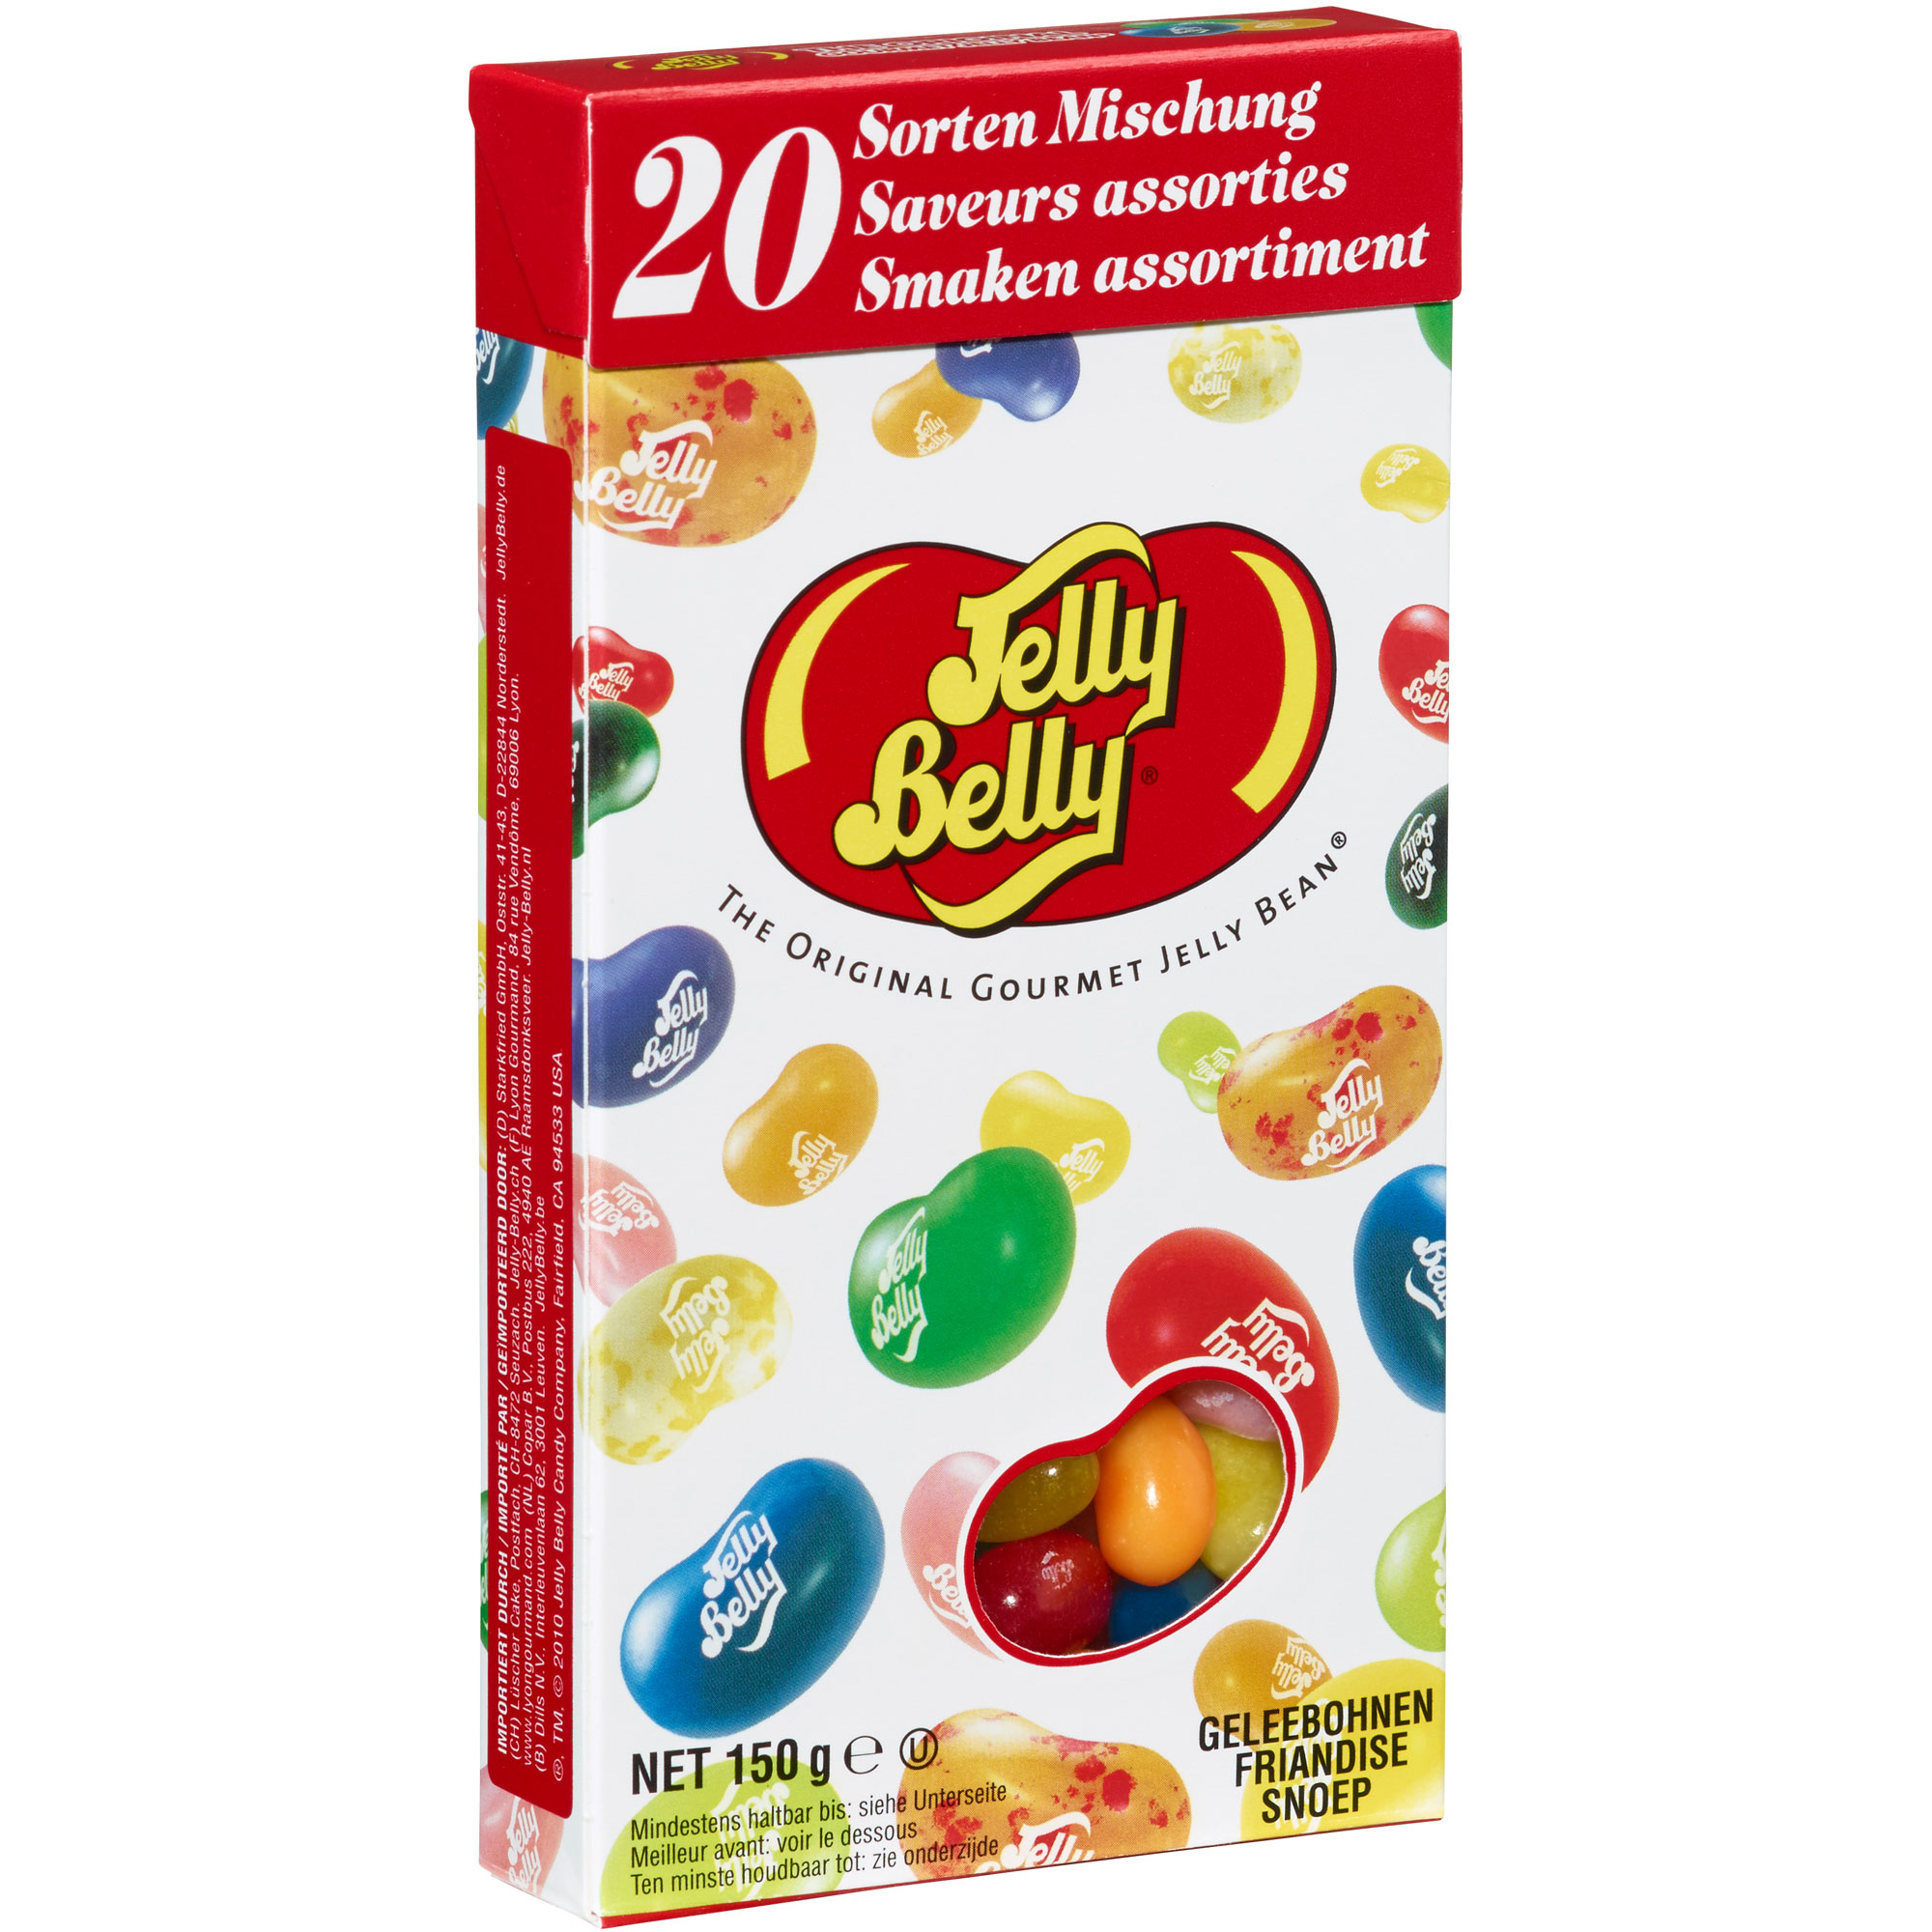 jelly belly 20 sorten mischung flip-top-box 150g